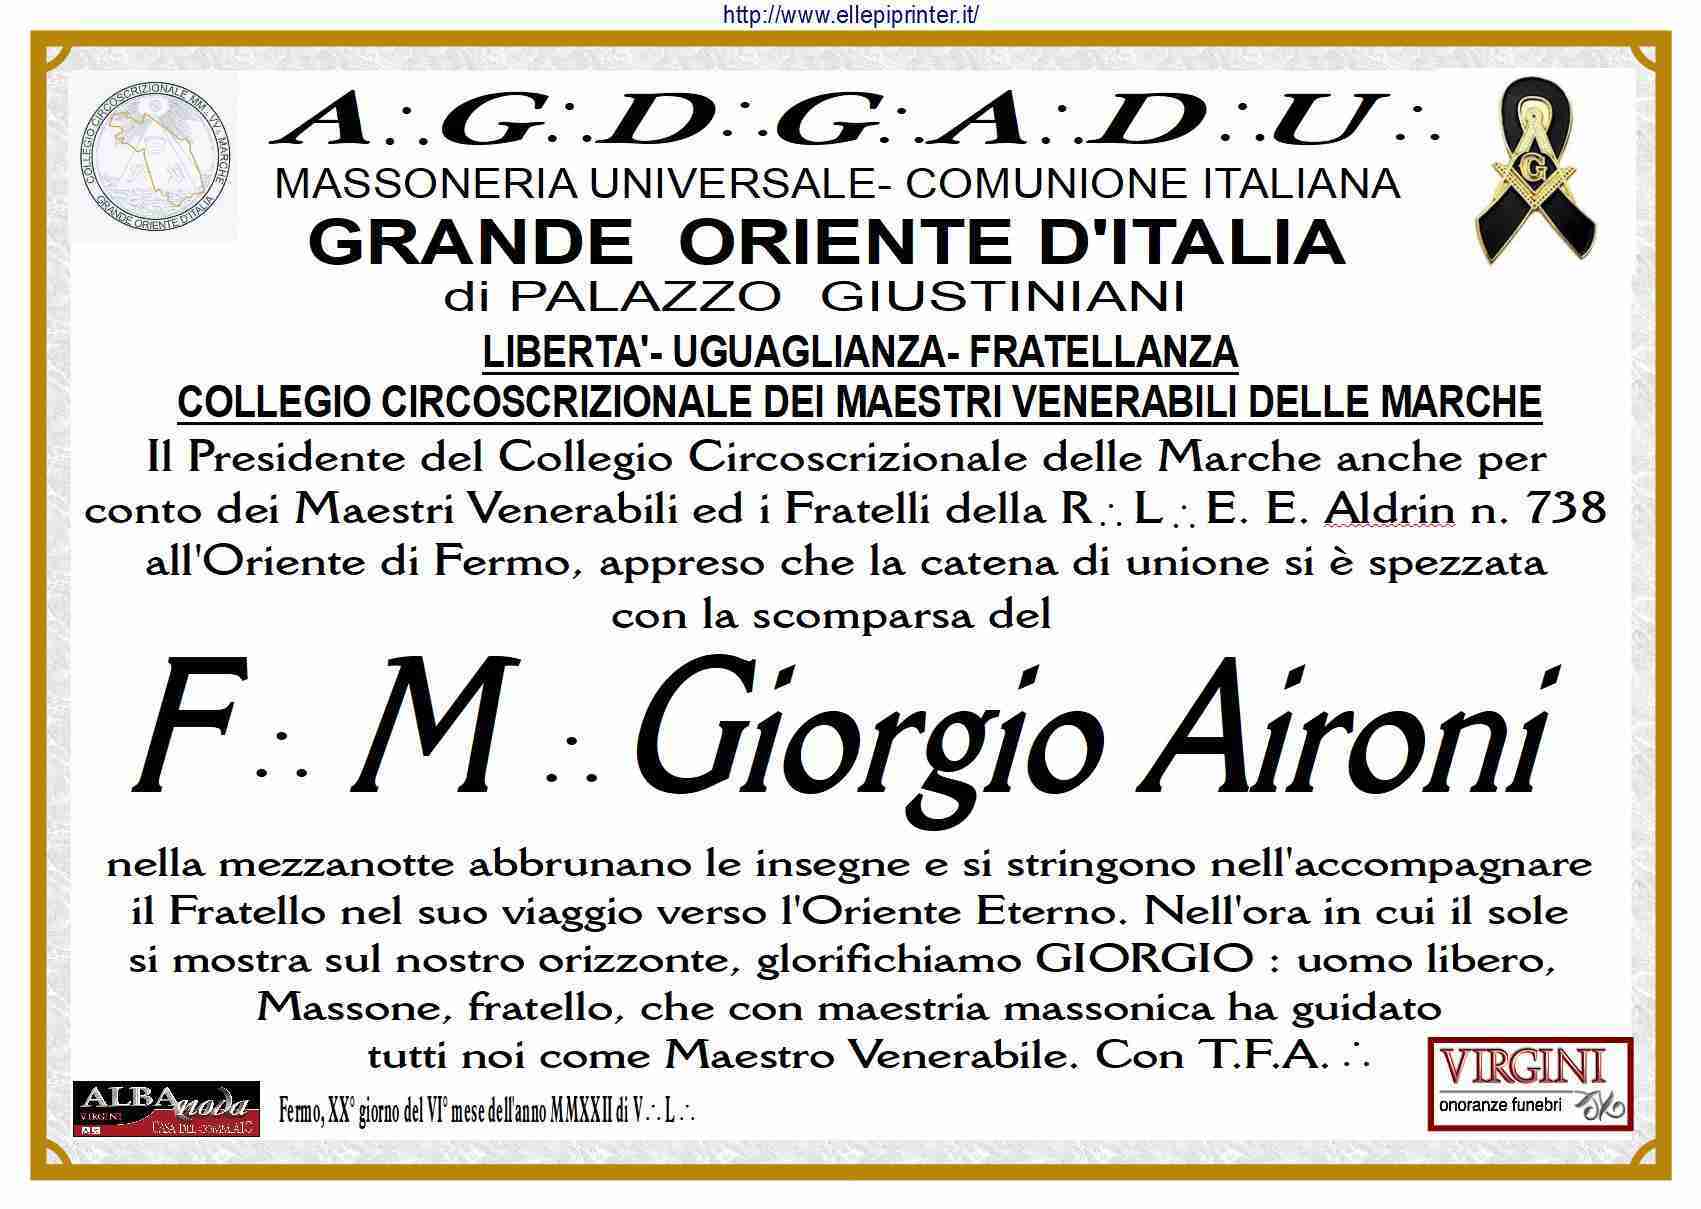 Giorgio Aironi